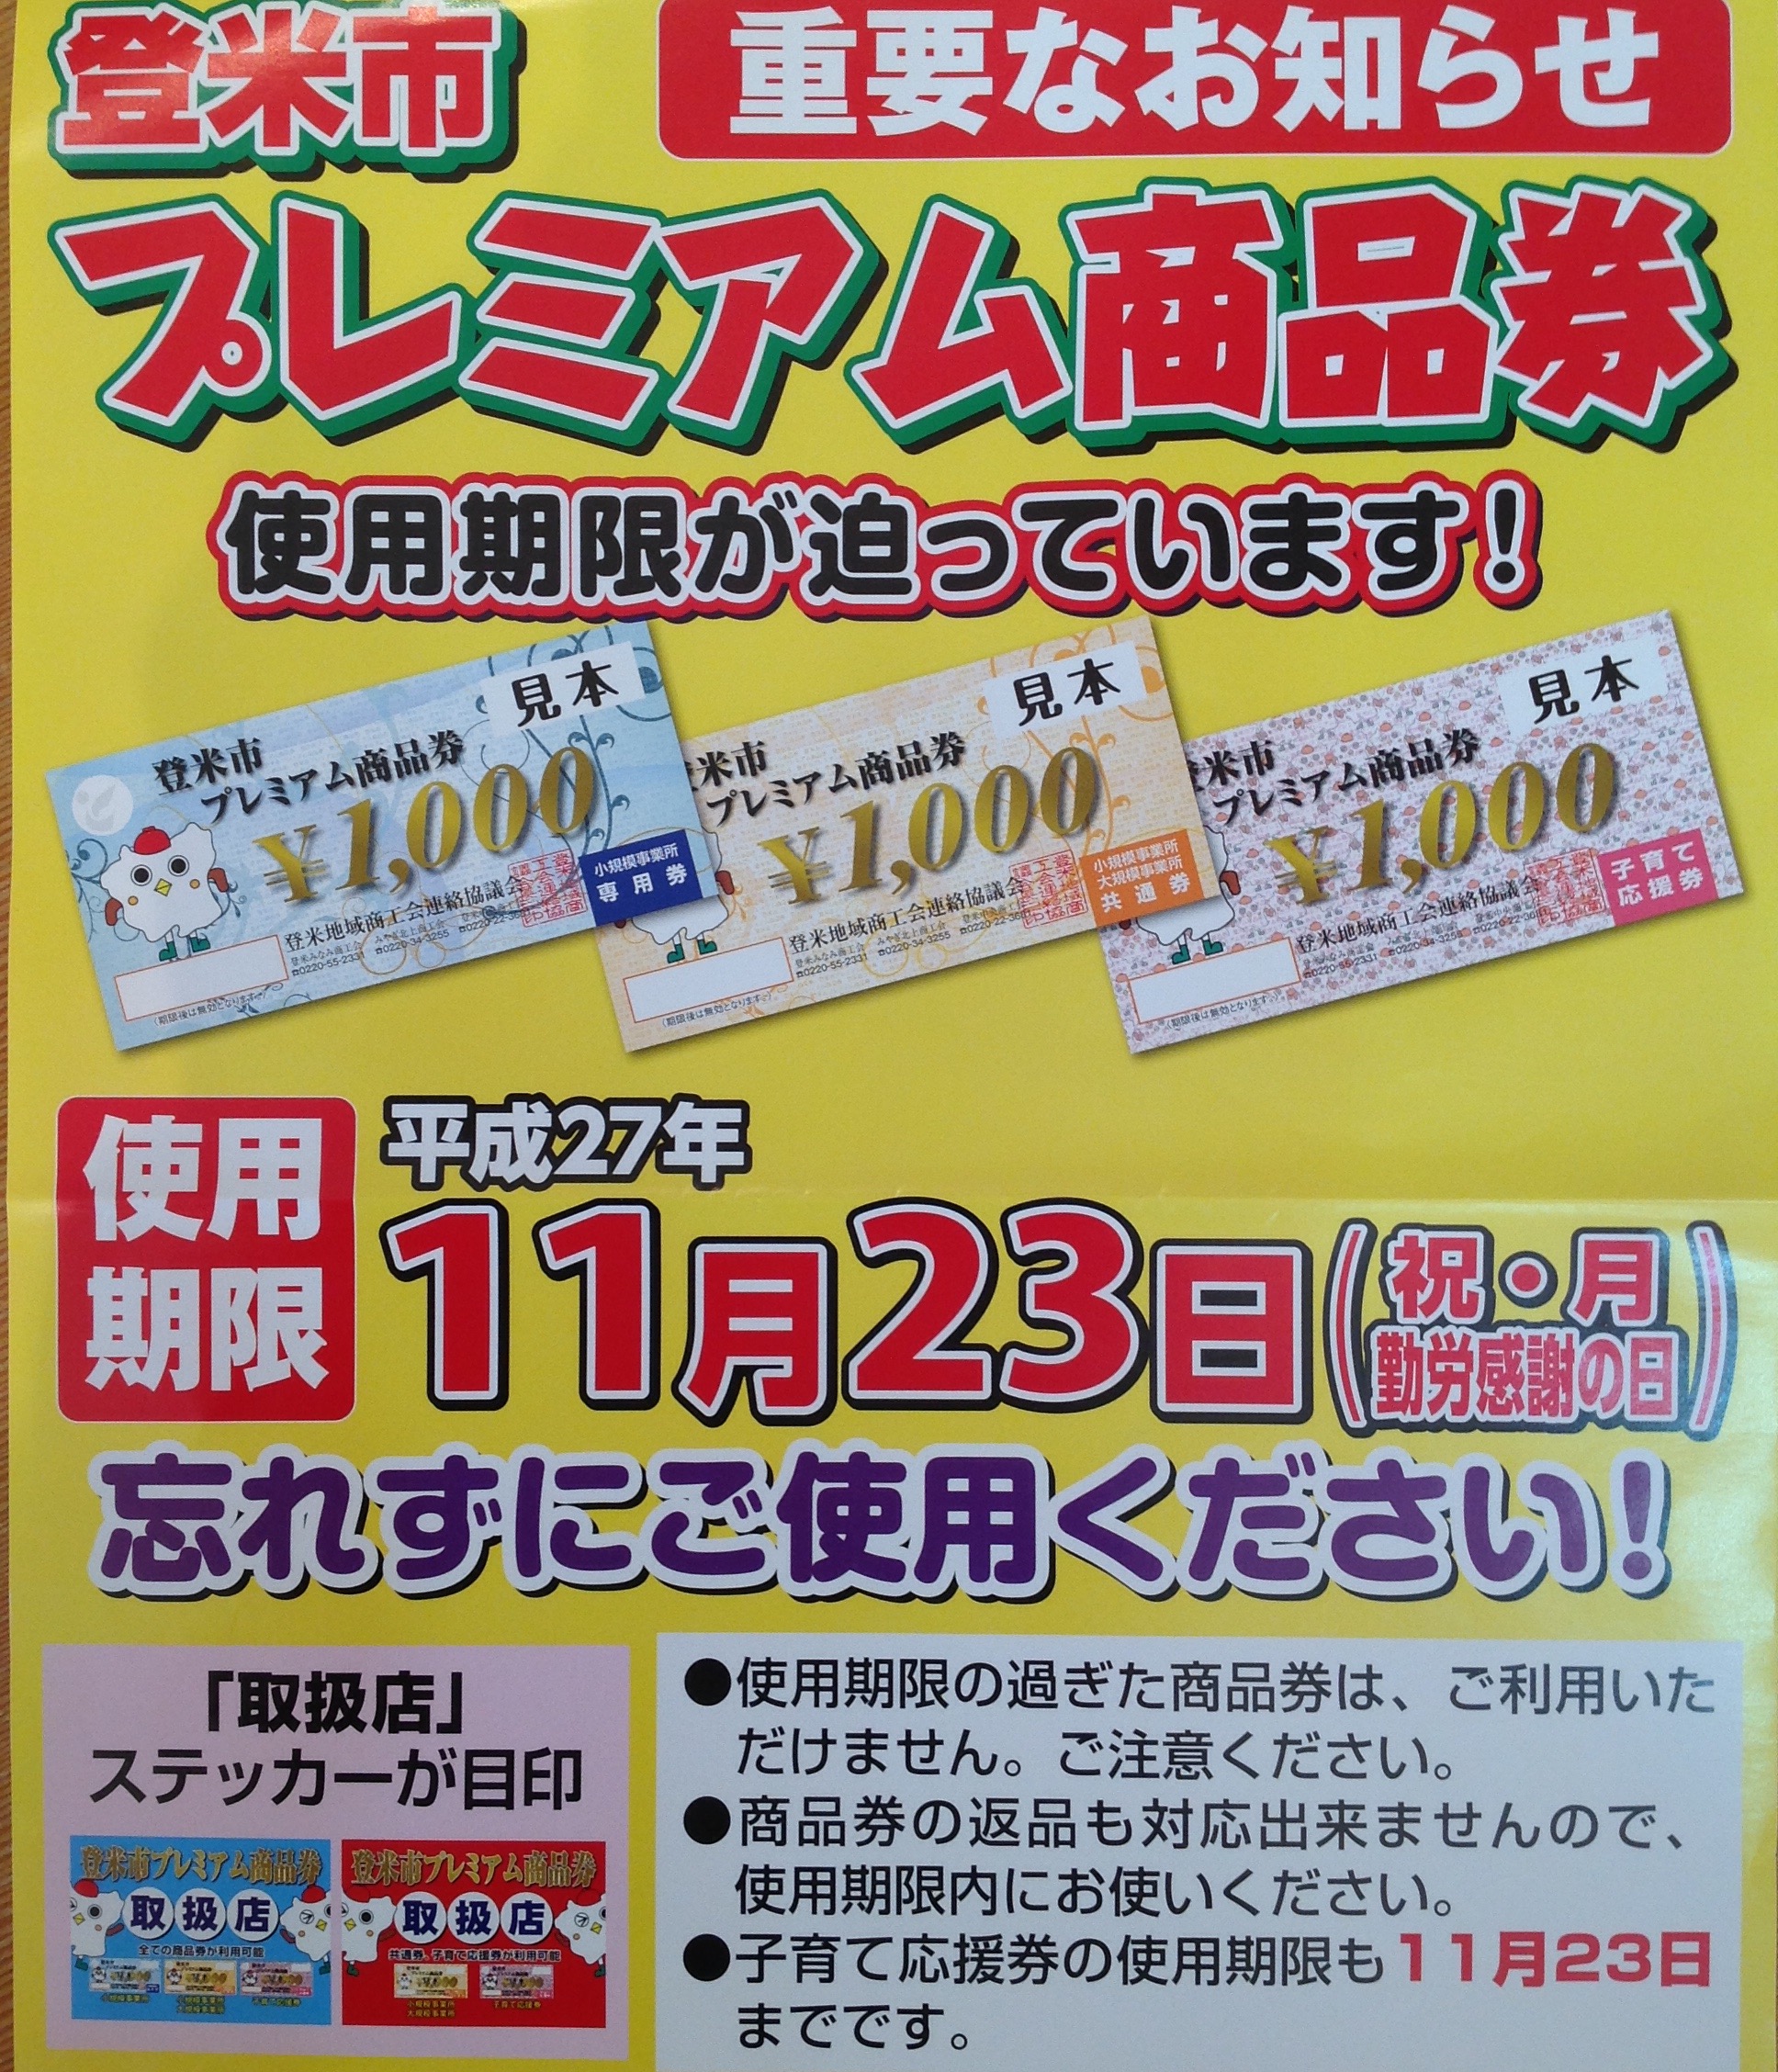 http://www.root-ex.co.jp/sanuma/2015/11/13/01/image.jpeg